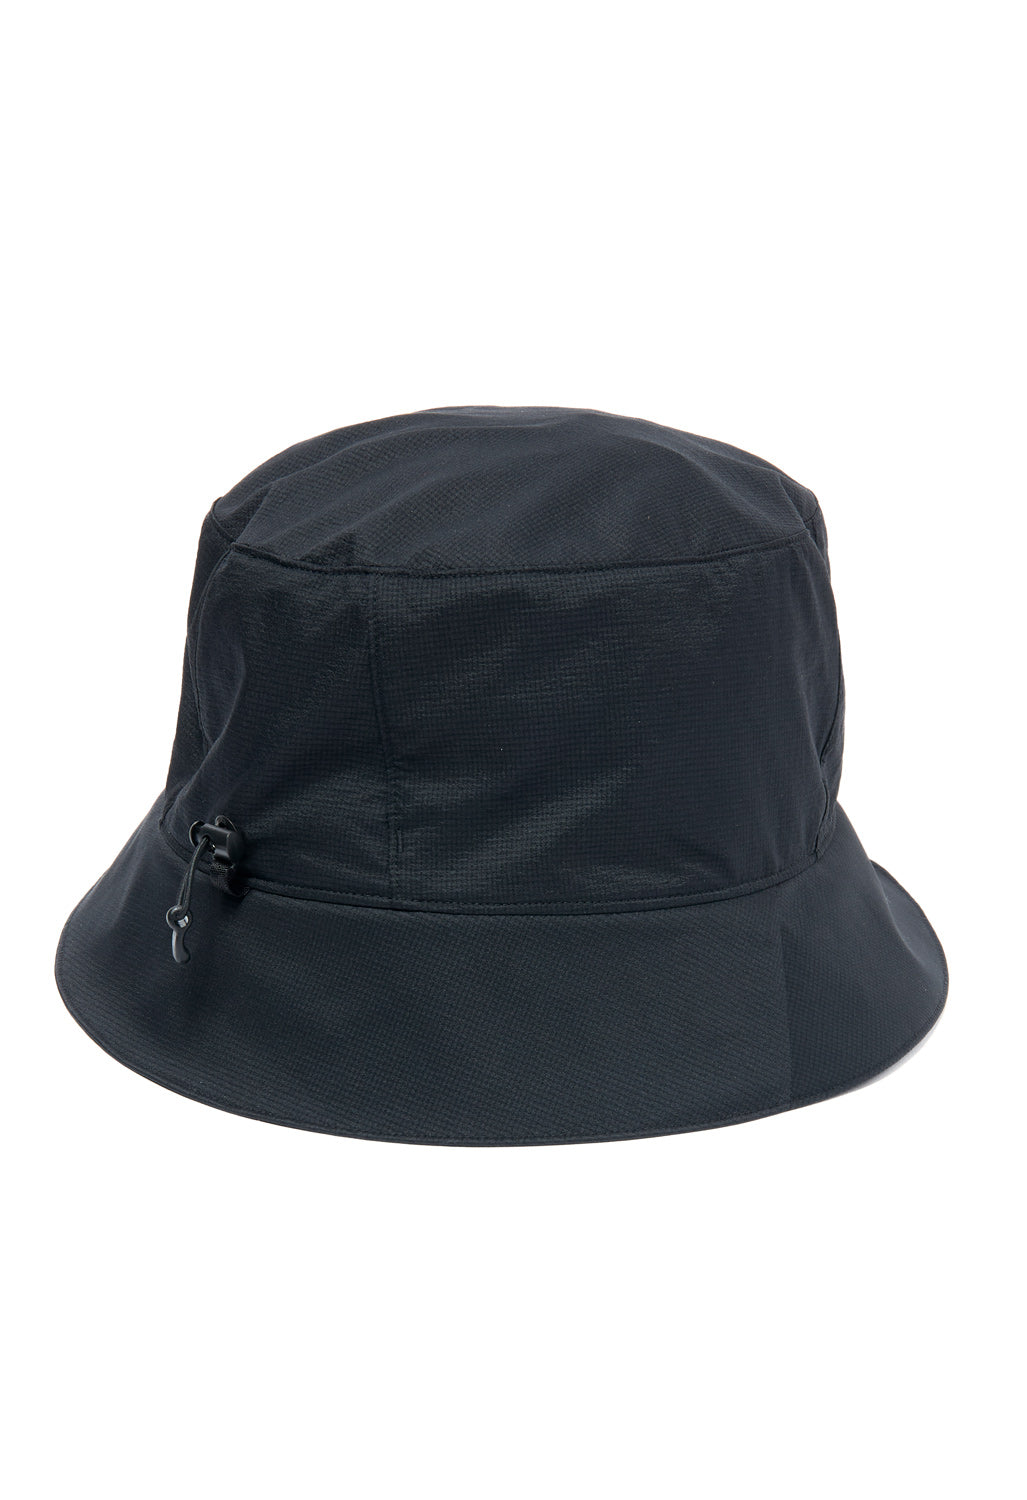 Arc'teryx Aerios Bucket Hat - Black